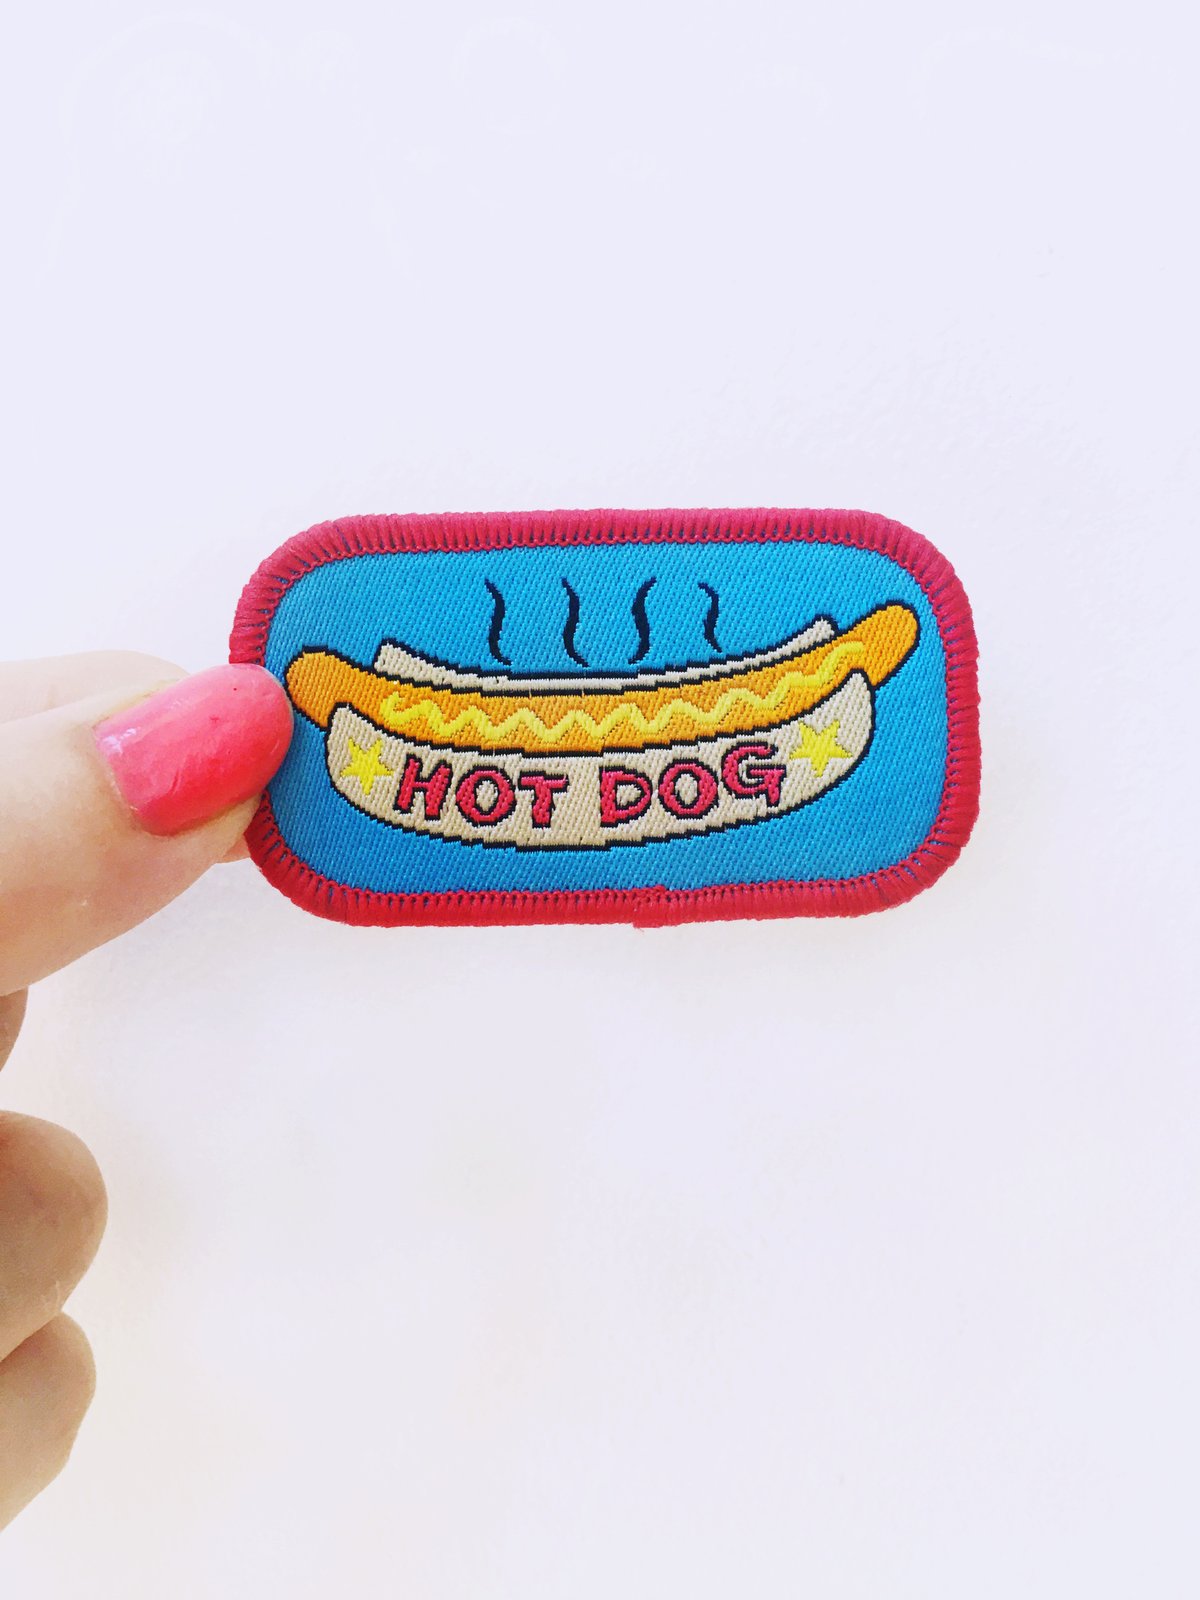 Hotdog Patch